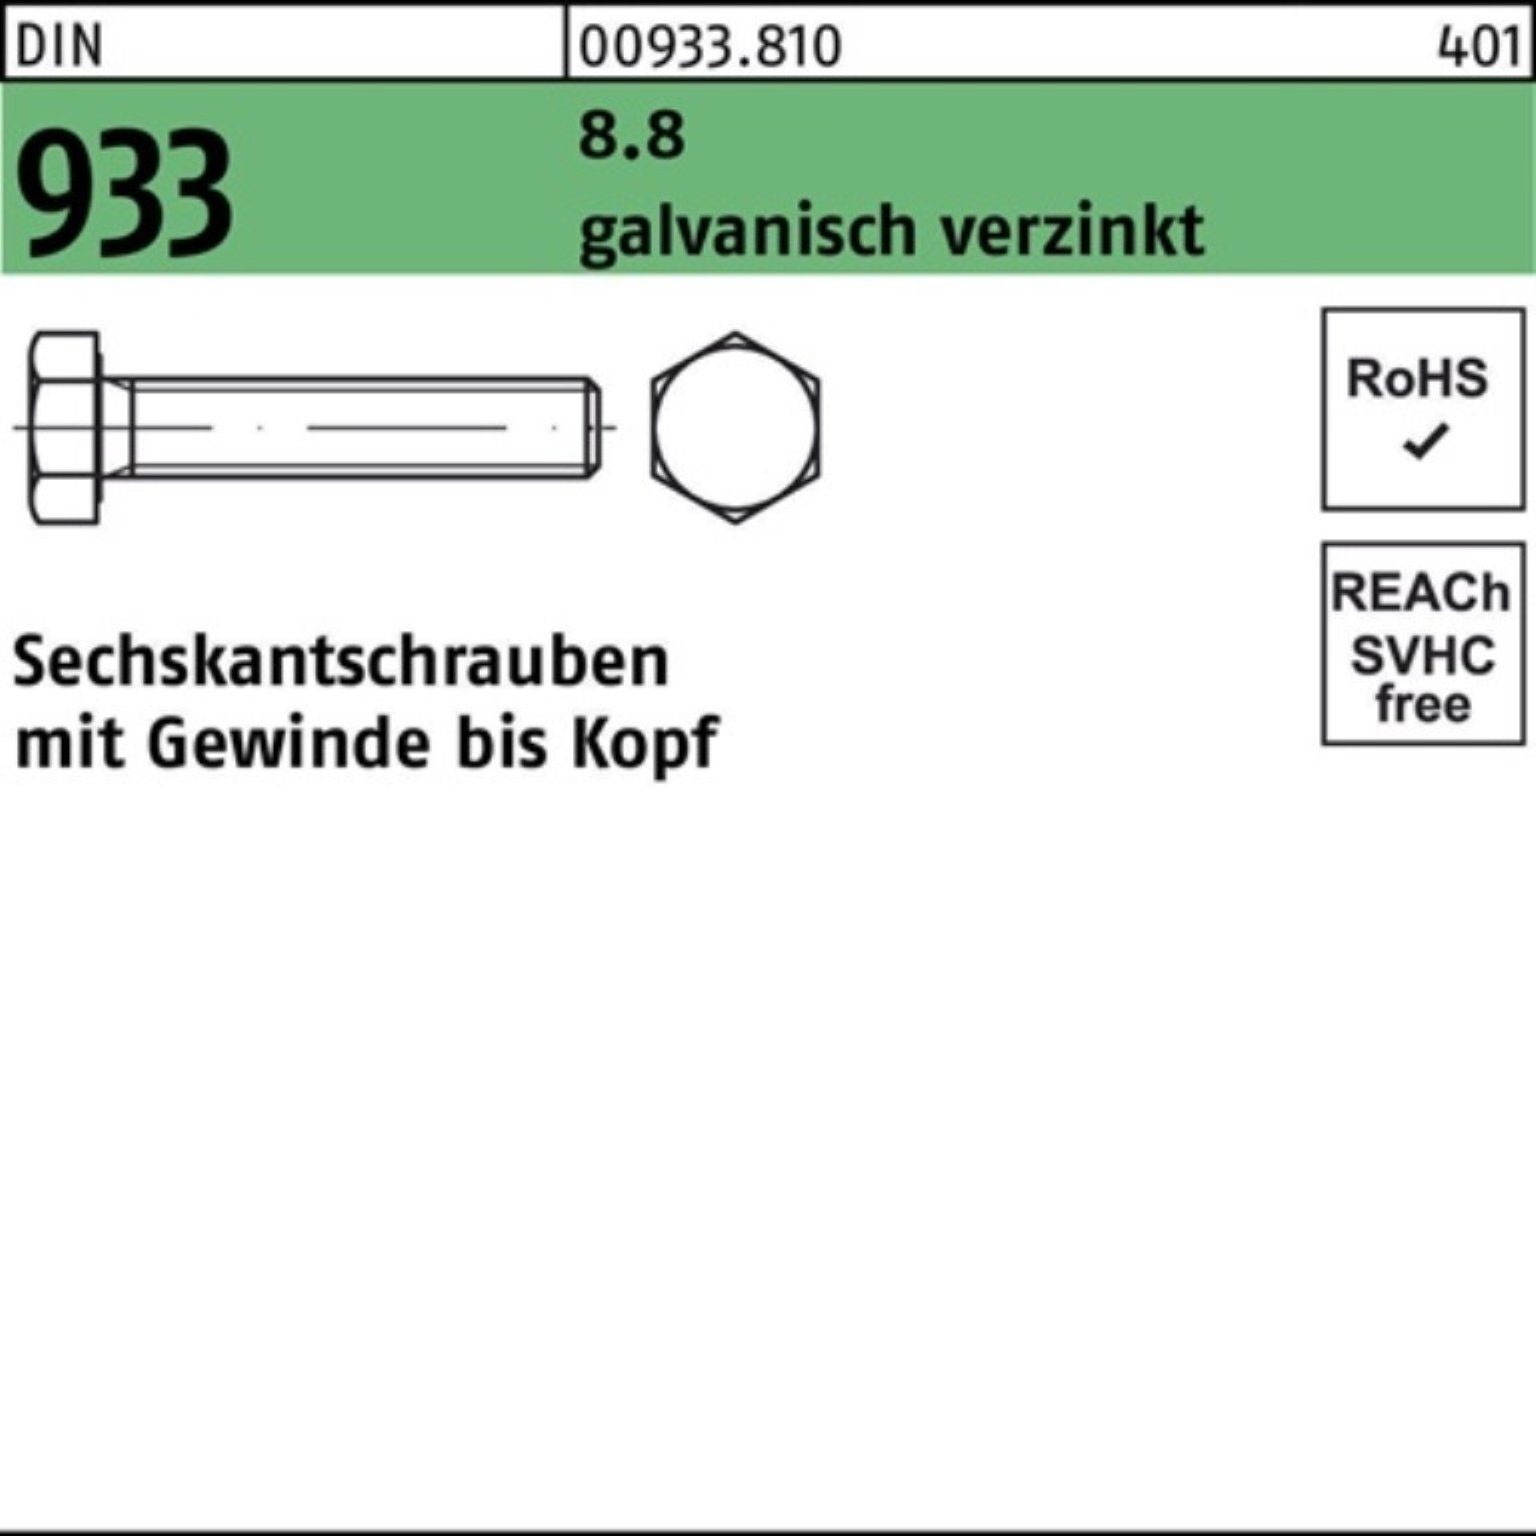 Sechskantschraube M30x DIN 100er Stü 1 260 galv.verz. VG 933 Reyher Sechskantschraube Pack 8.8